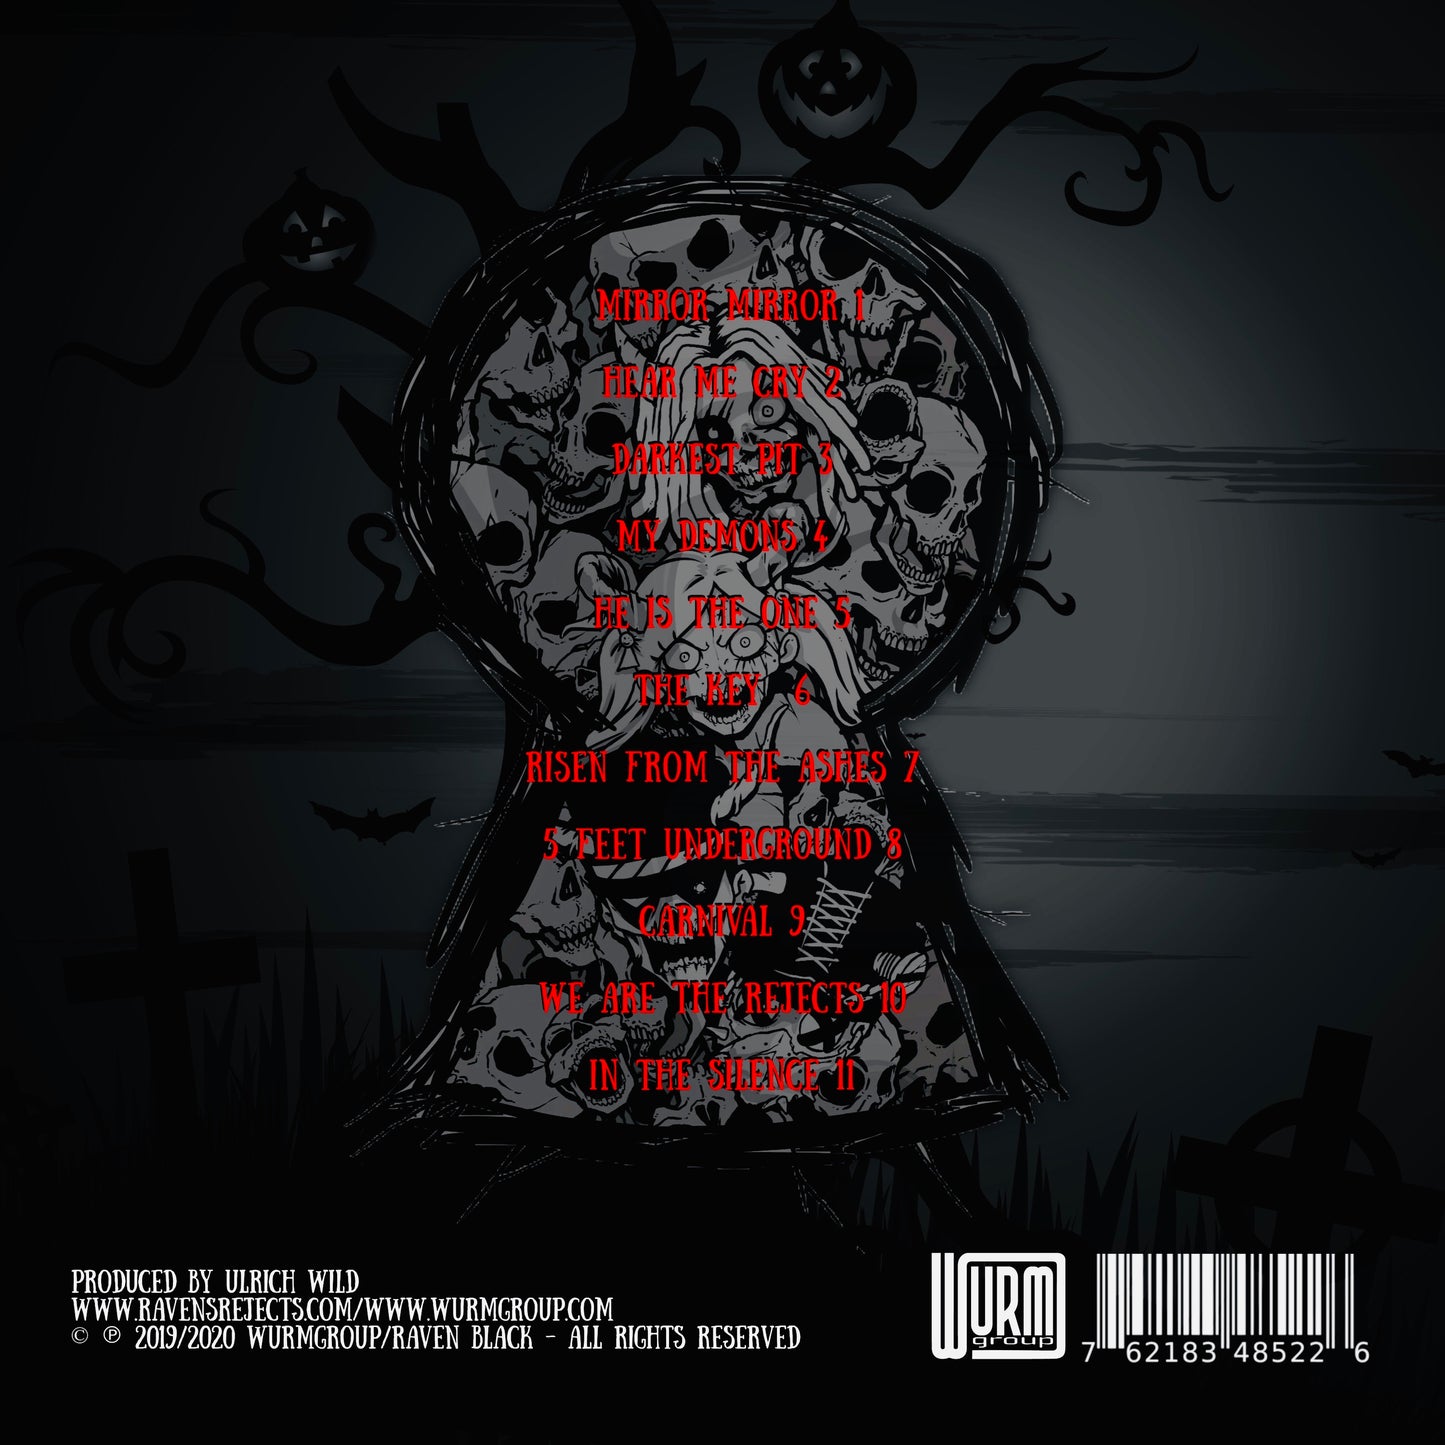 Raven Black - The Key - CD cover 